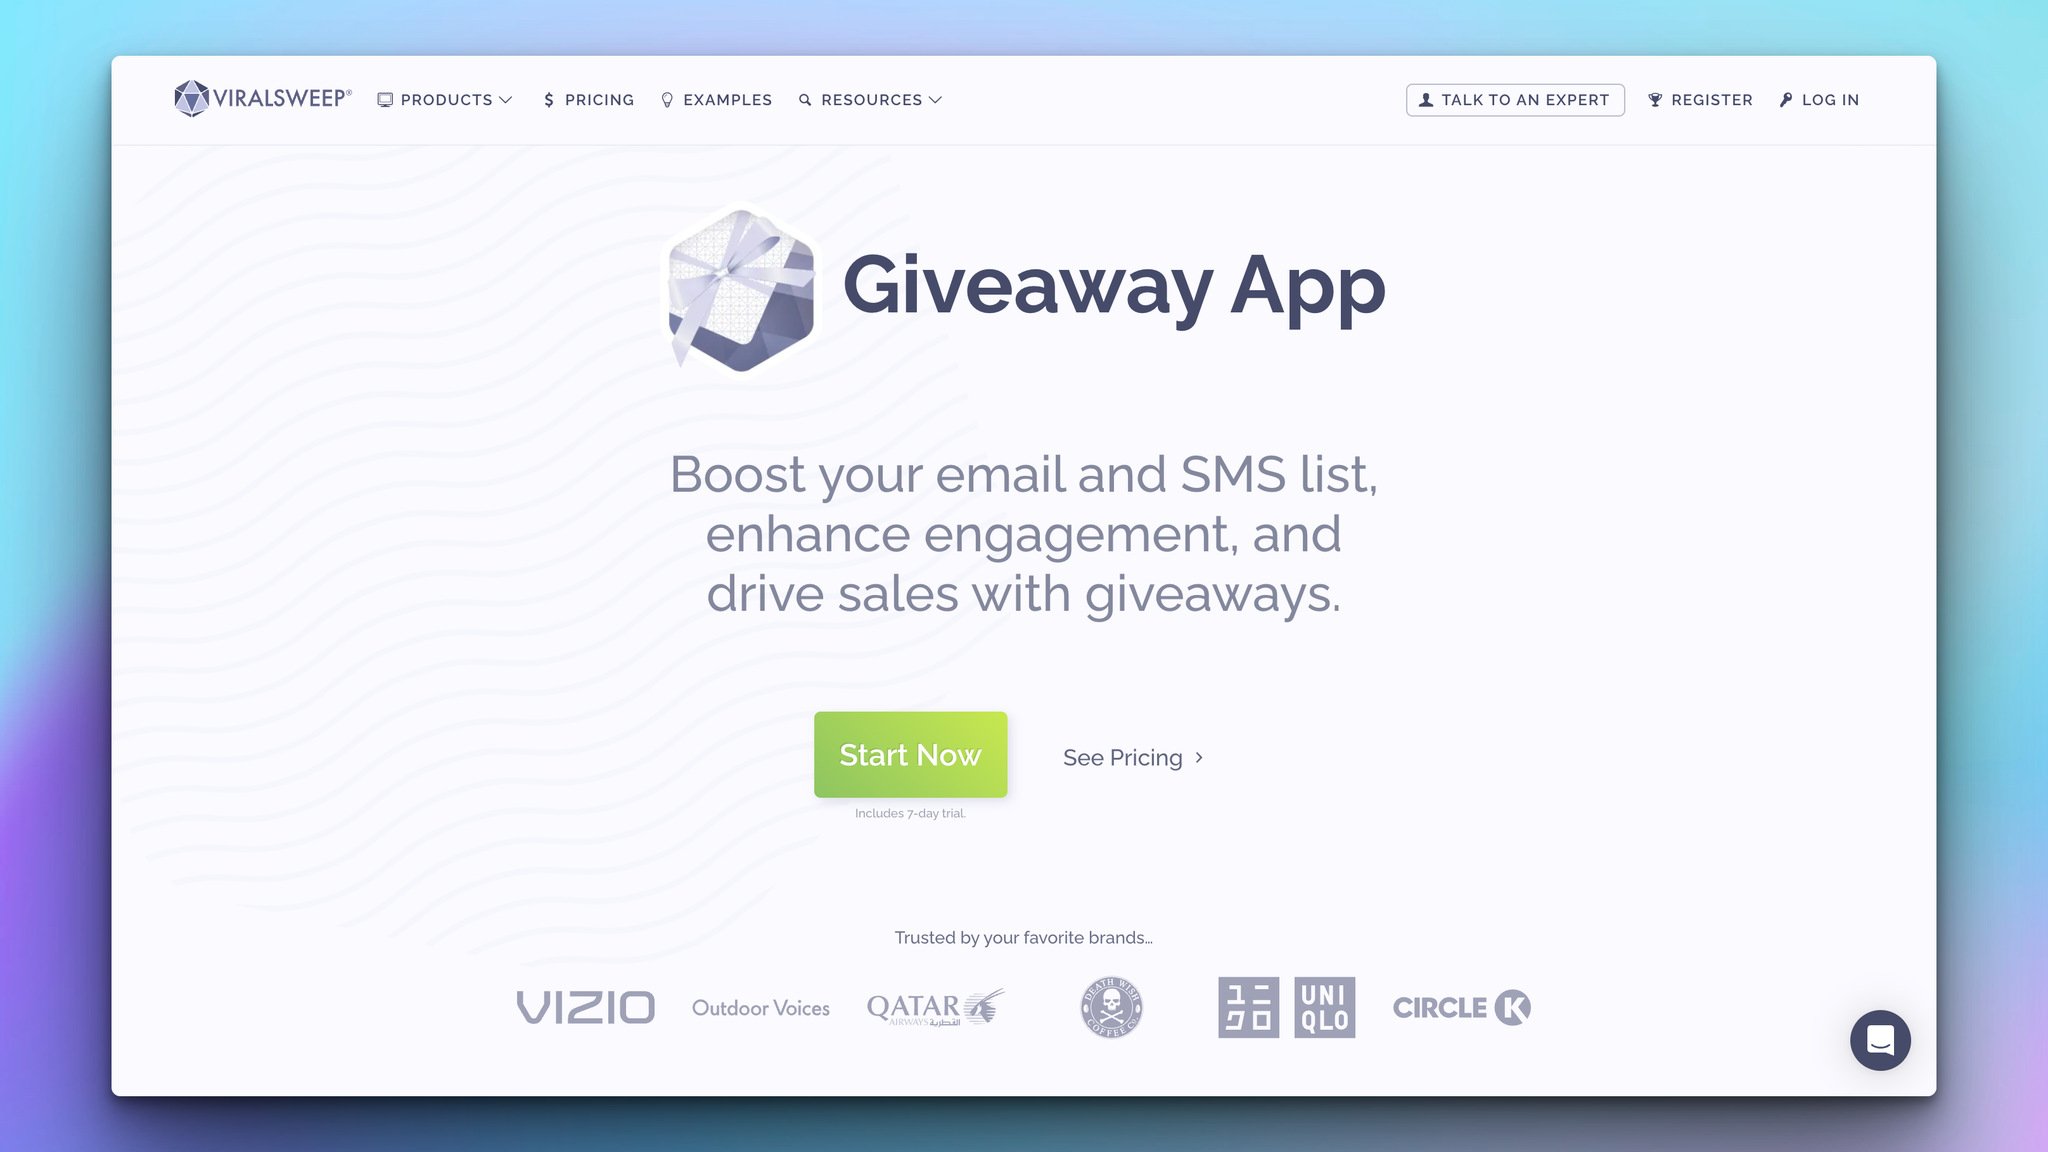 Giveaway Ninja  Shopify App Store